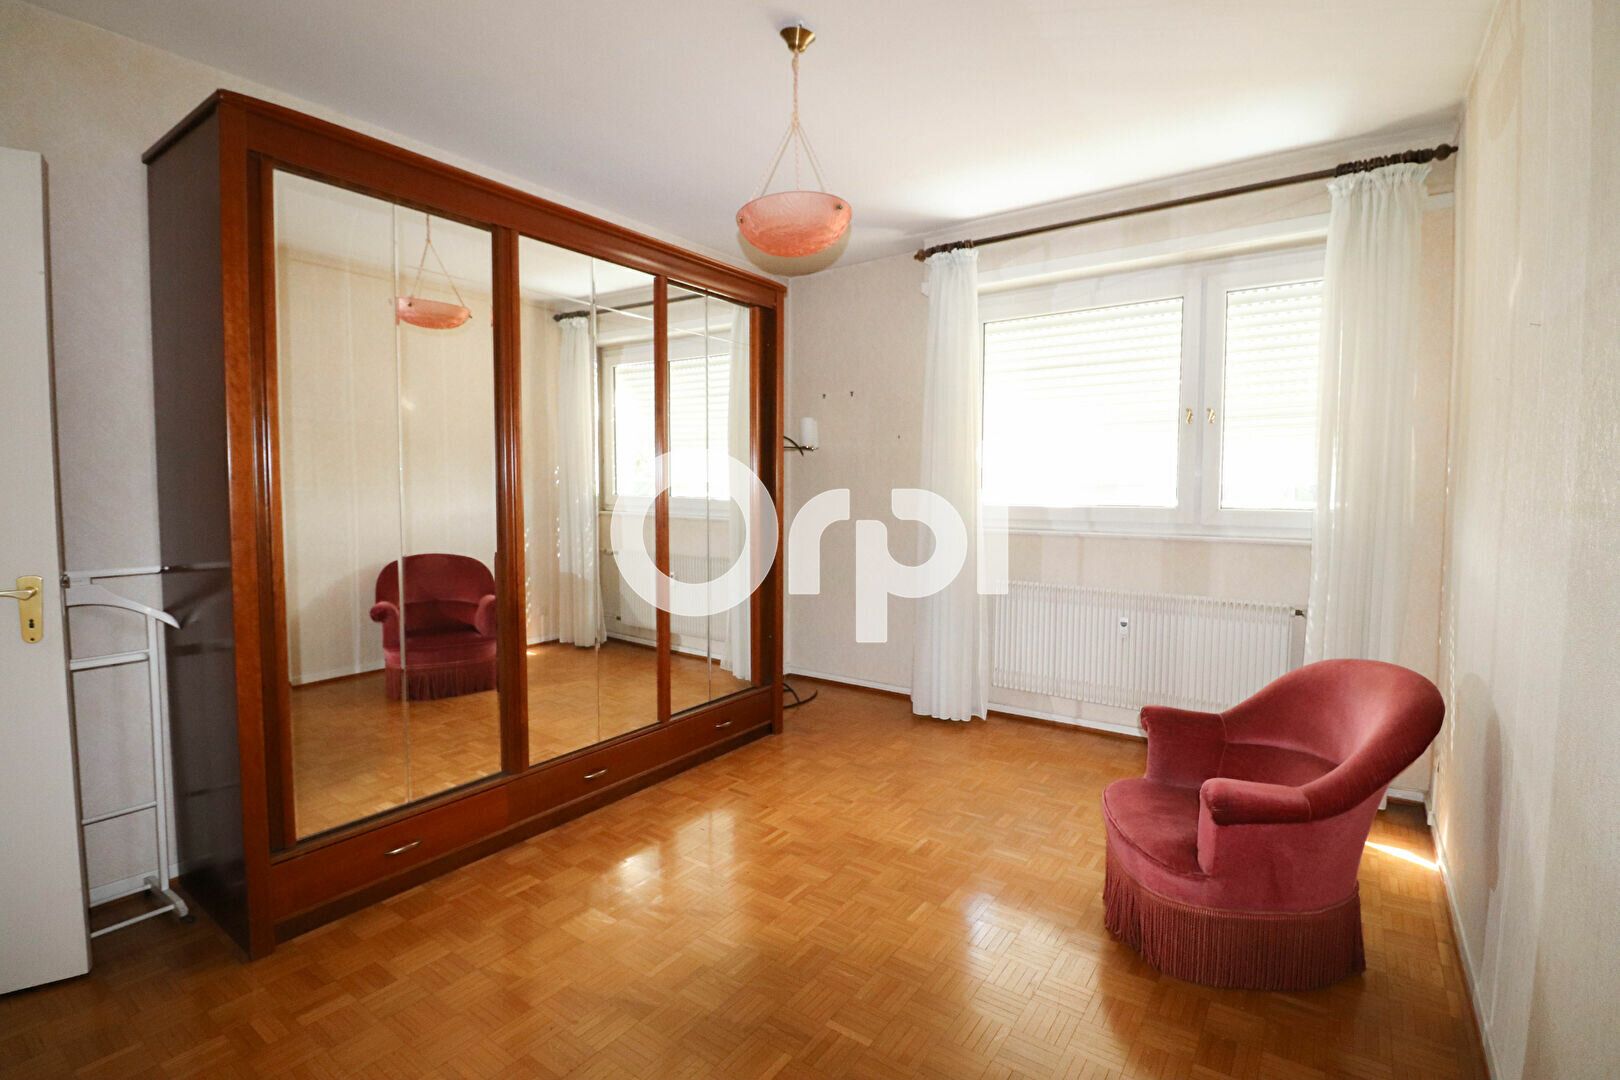 Appartement à vendre 4 102.53m2 à Strasbourg vignette-7